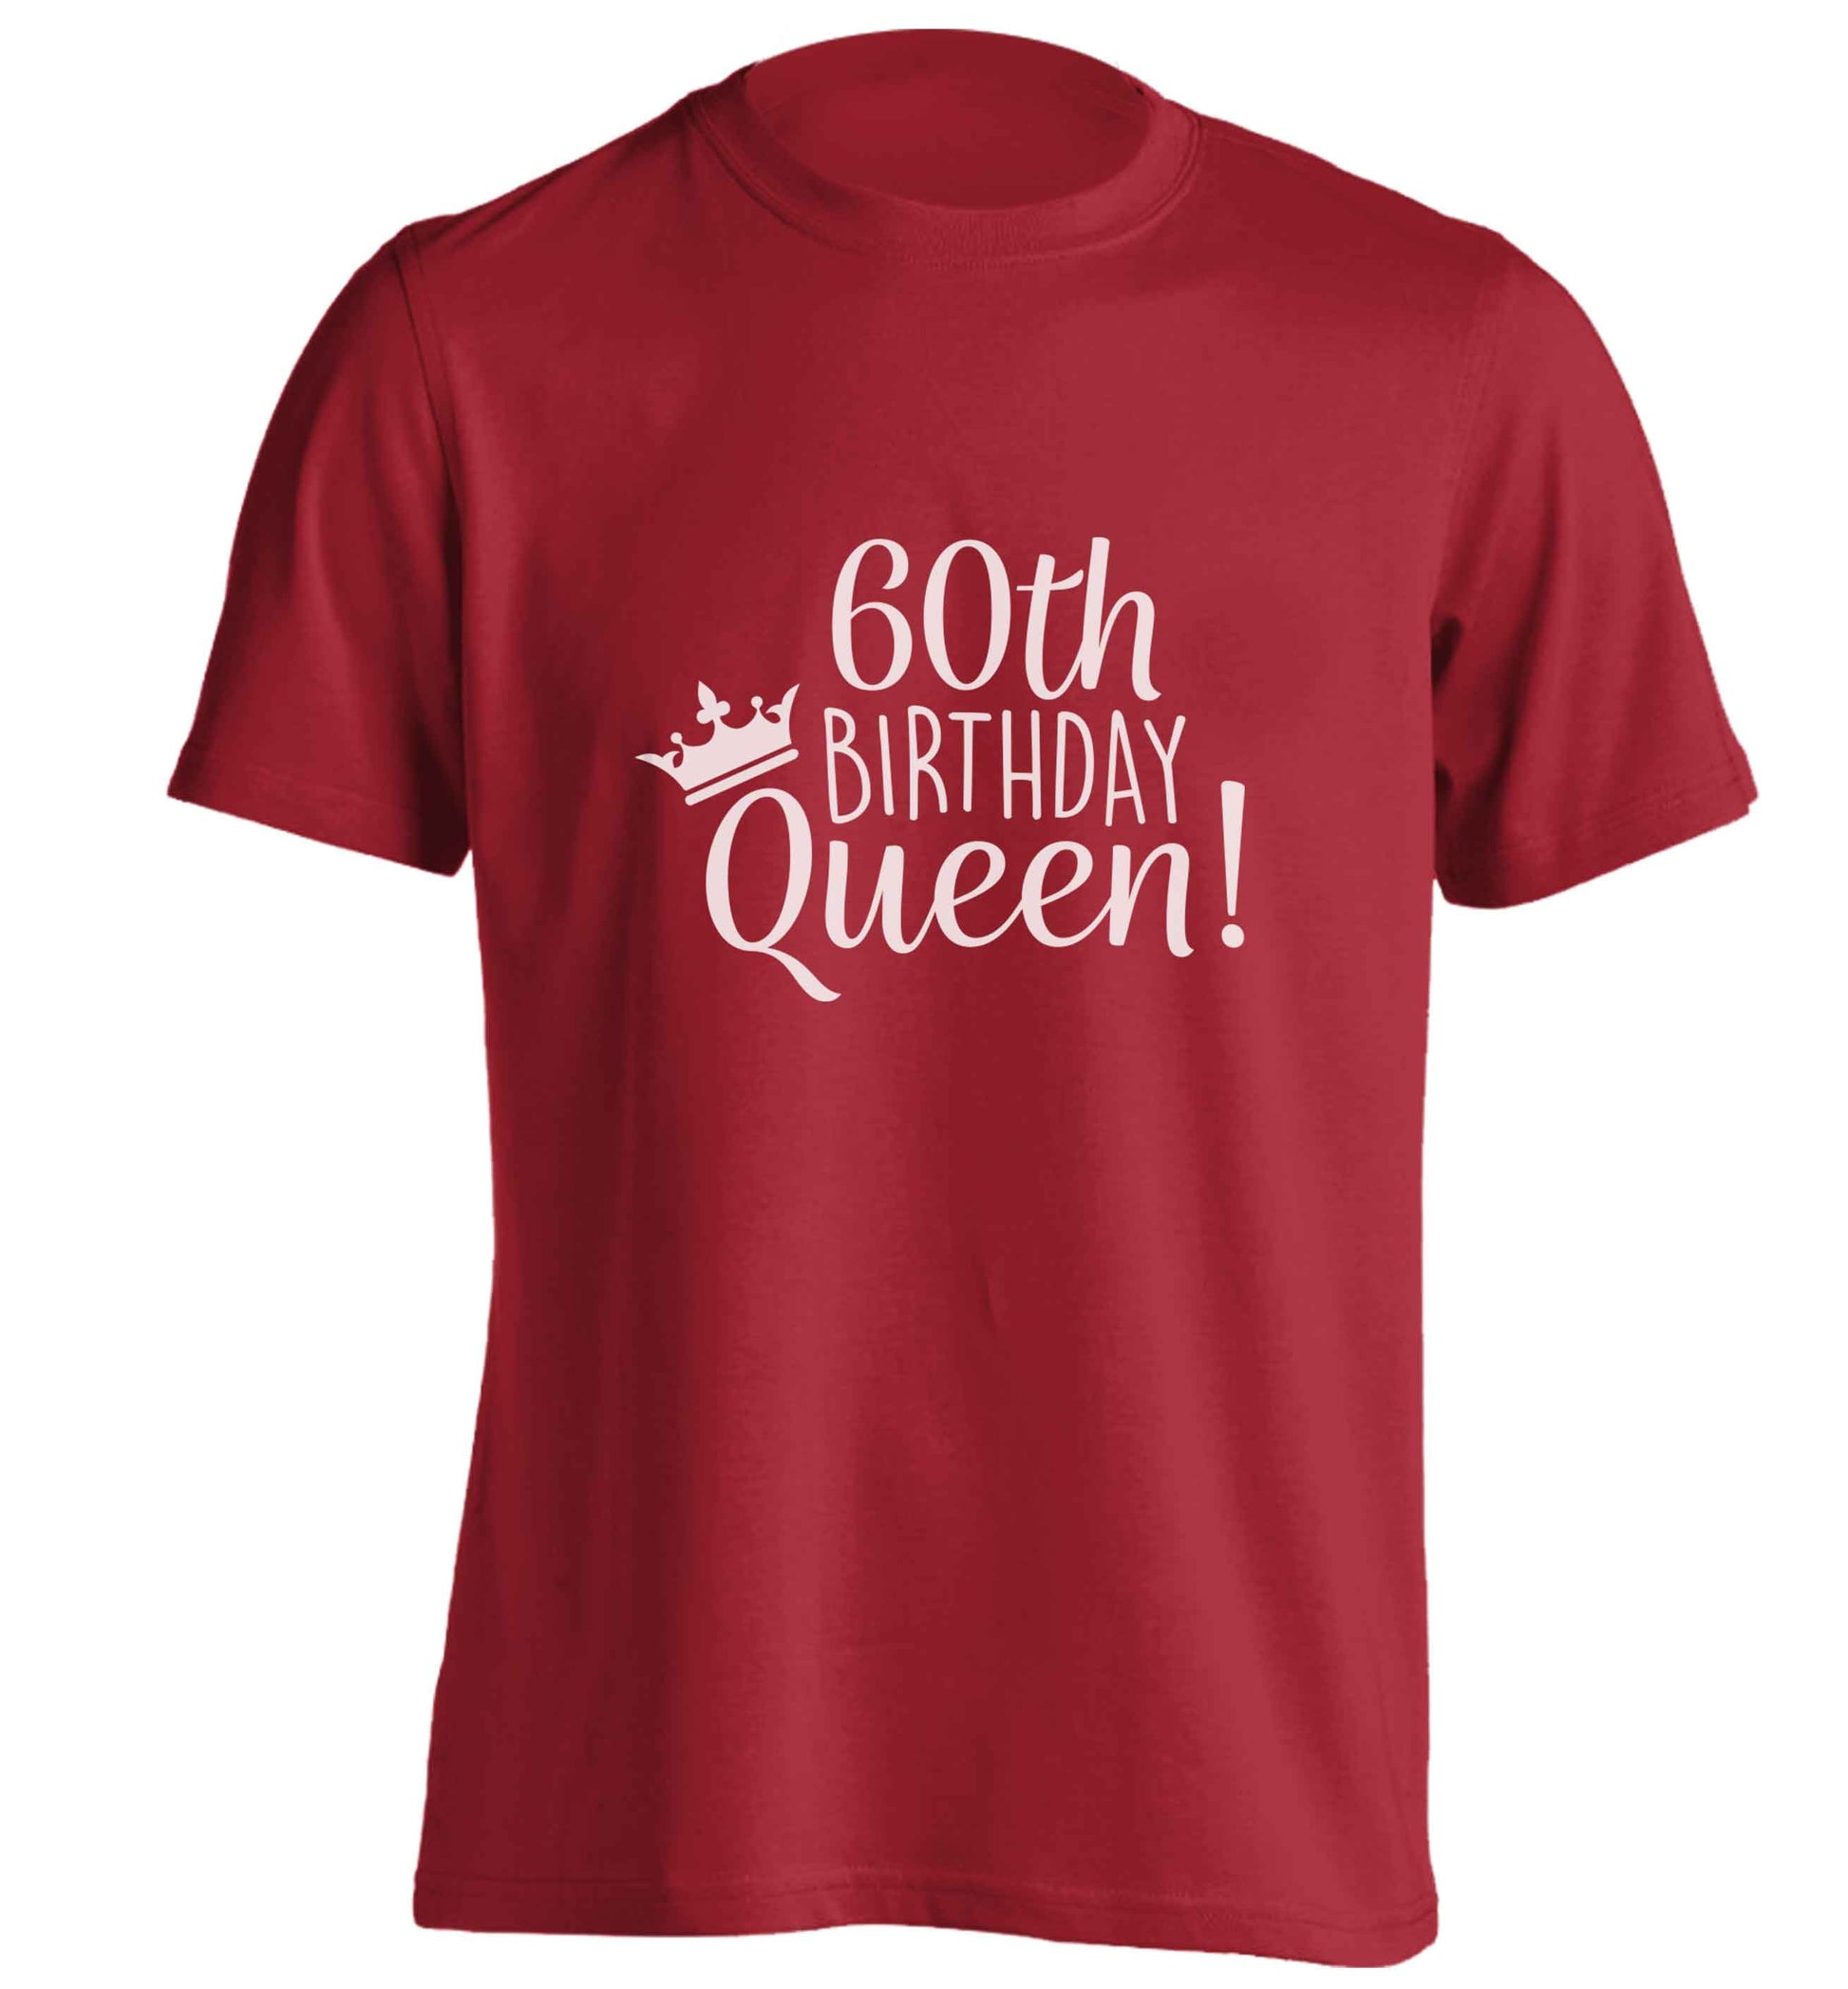 60th birthday Queen adults unisex red Tshirt 2XL